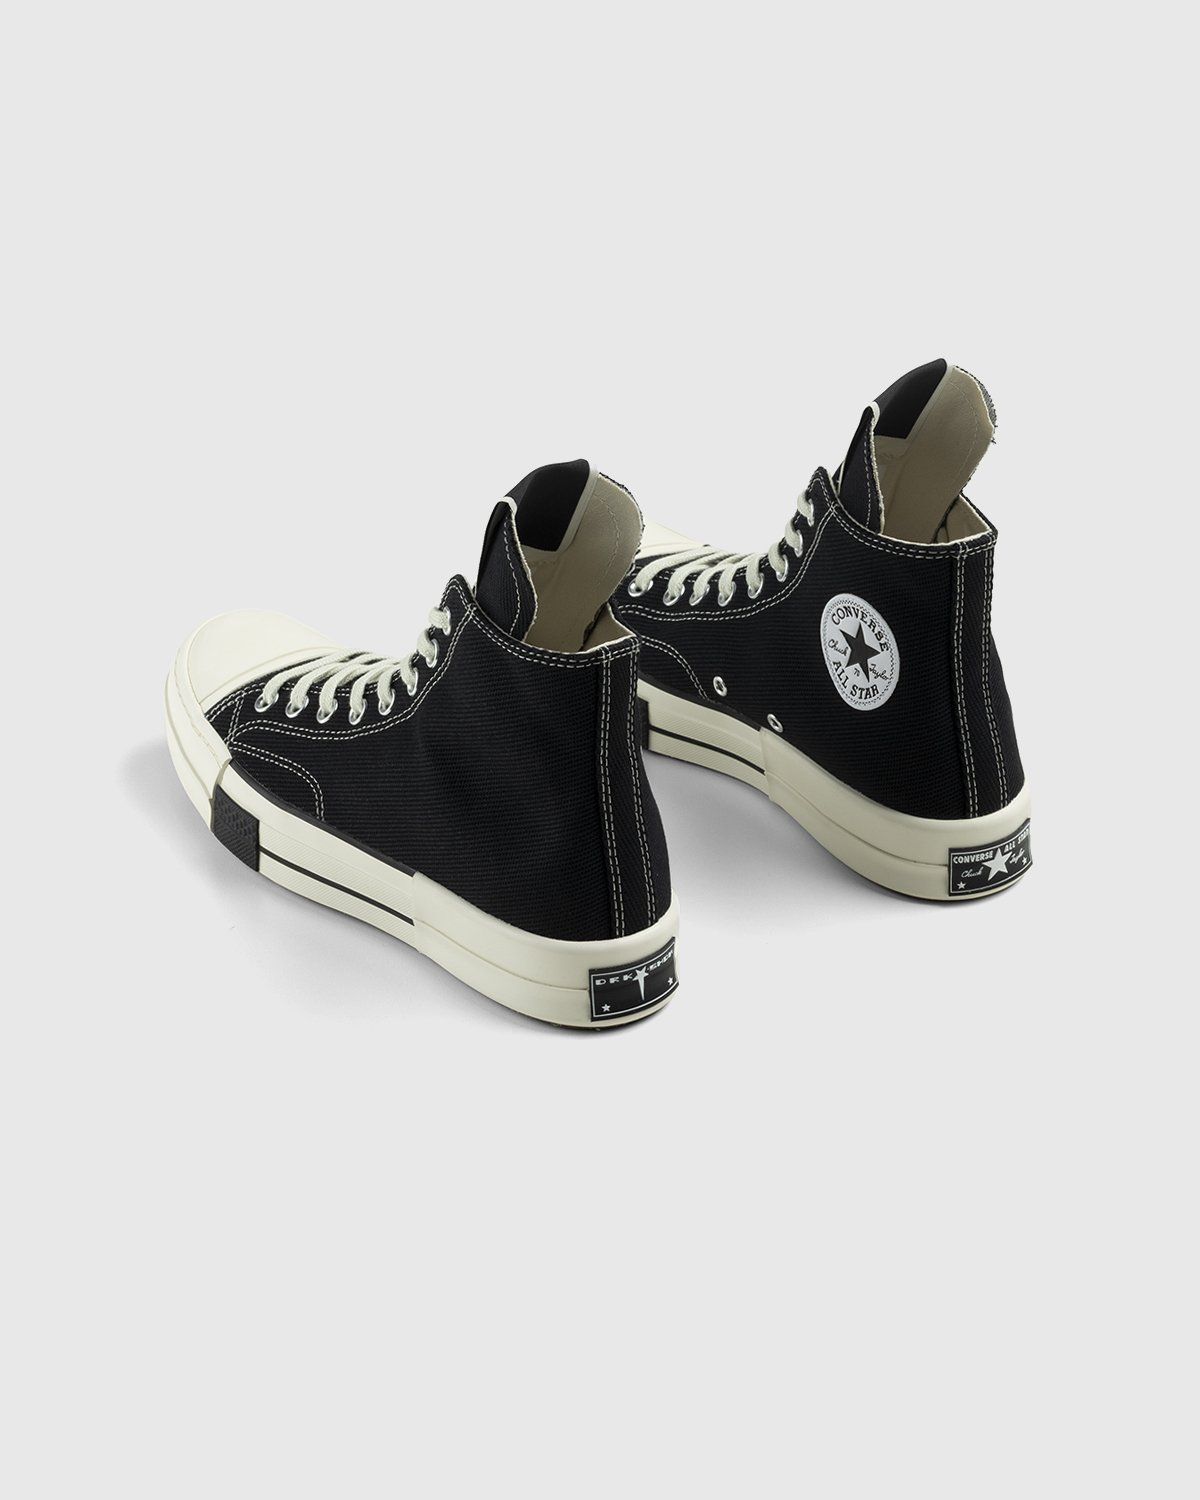 Converse x Rick Owens – DRKSTAR Chuck 70 High Black/Egret/Black - High Top Sneakers - Black - Image 4